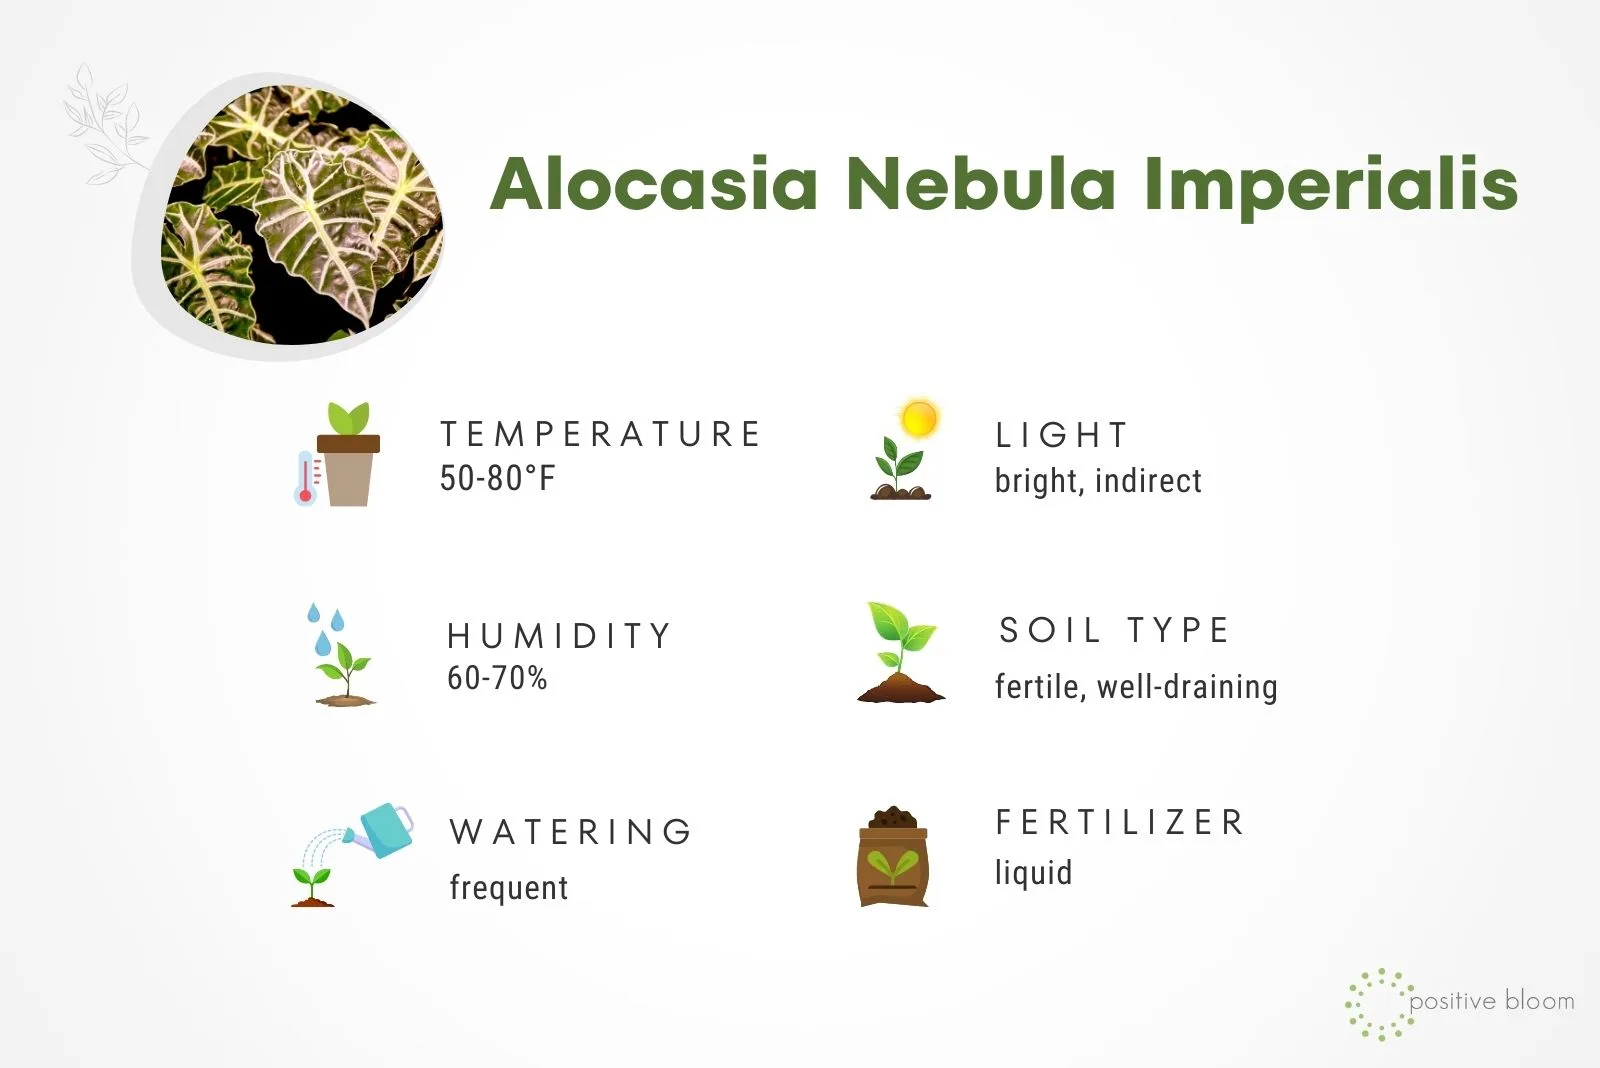 Alocasia Nebula Imperialis facts